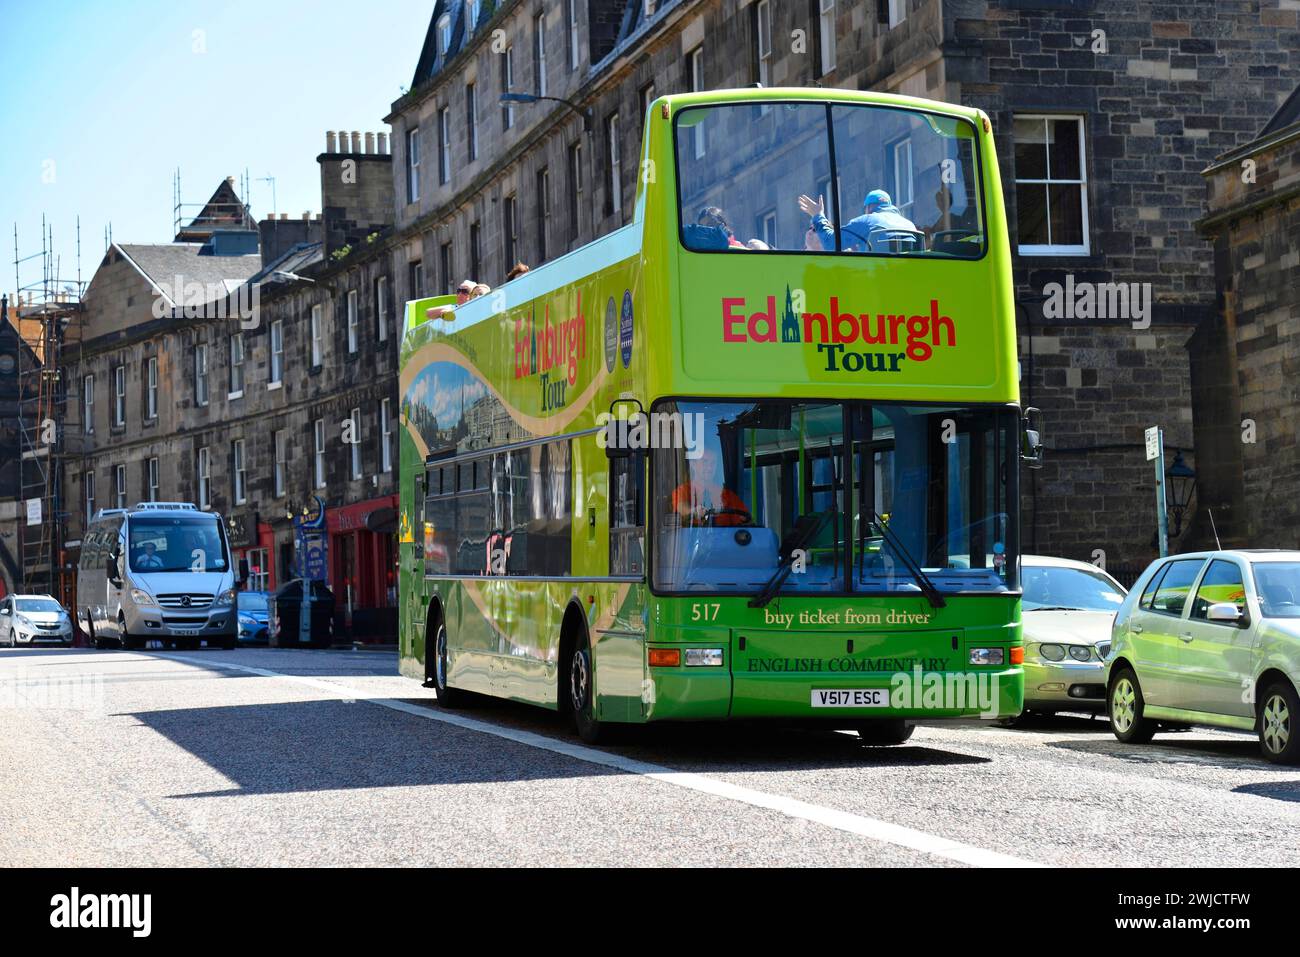 Tour di Edimburgo, autobus turistico, autobus turistico, Edimburgo, Scozia, gran Bretagna Foto Stock